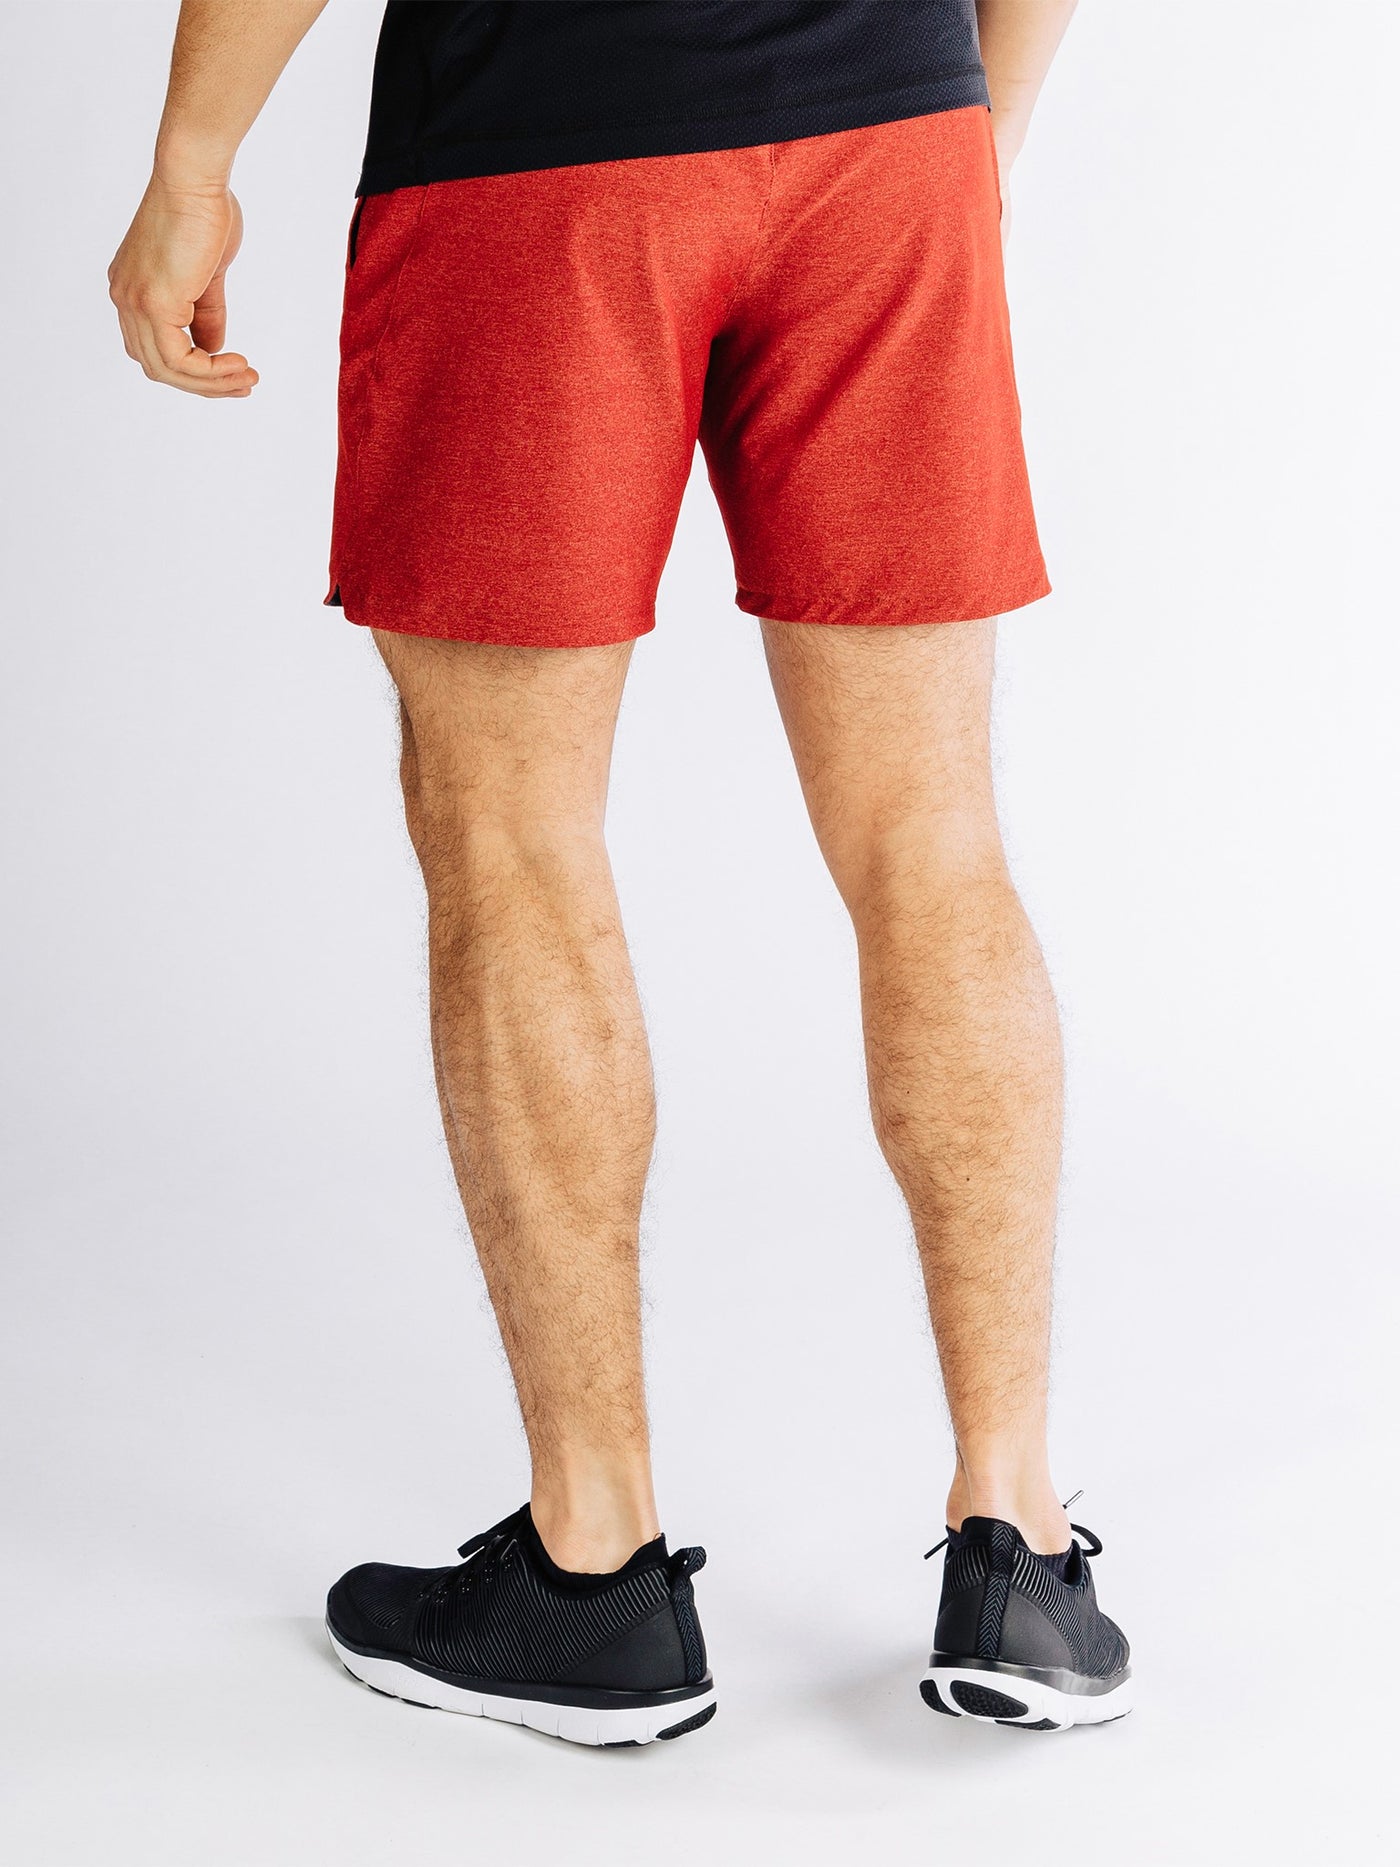 RHONE Guru 7" Unlined Yoga Shorts Men's Gym Shorts Red - Activemen Clothing